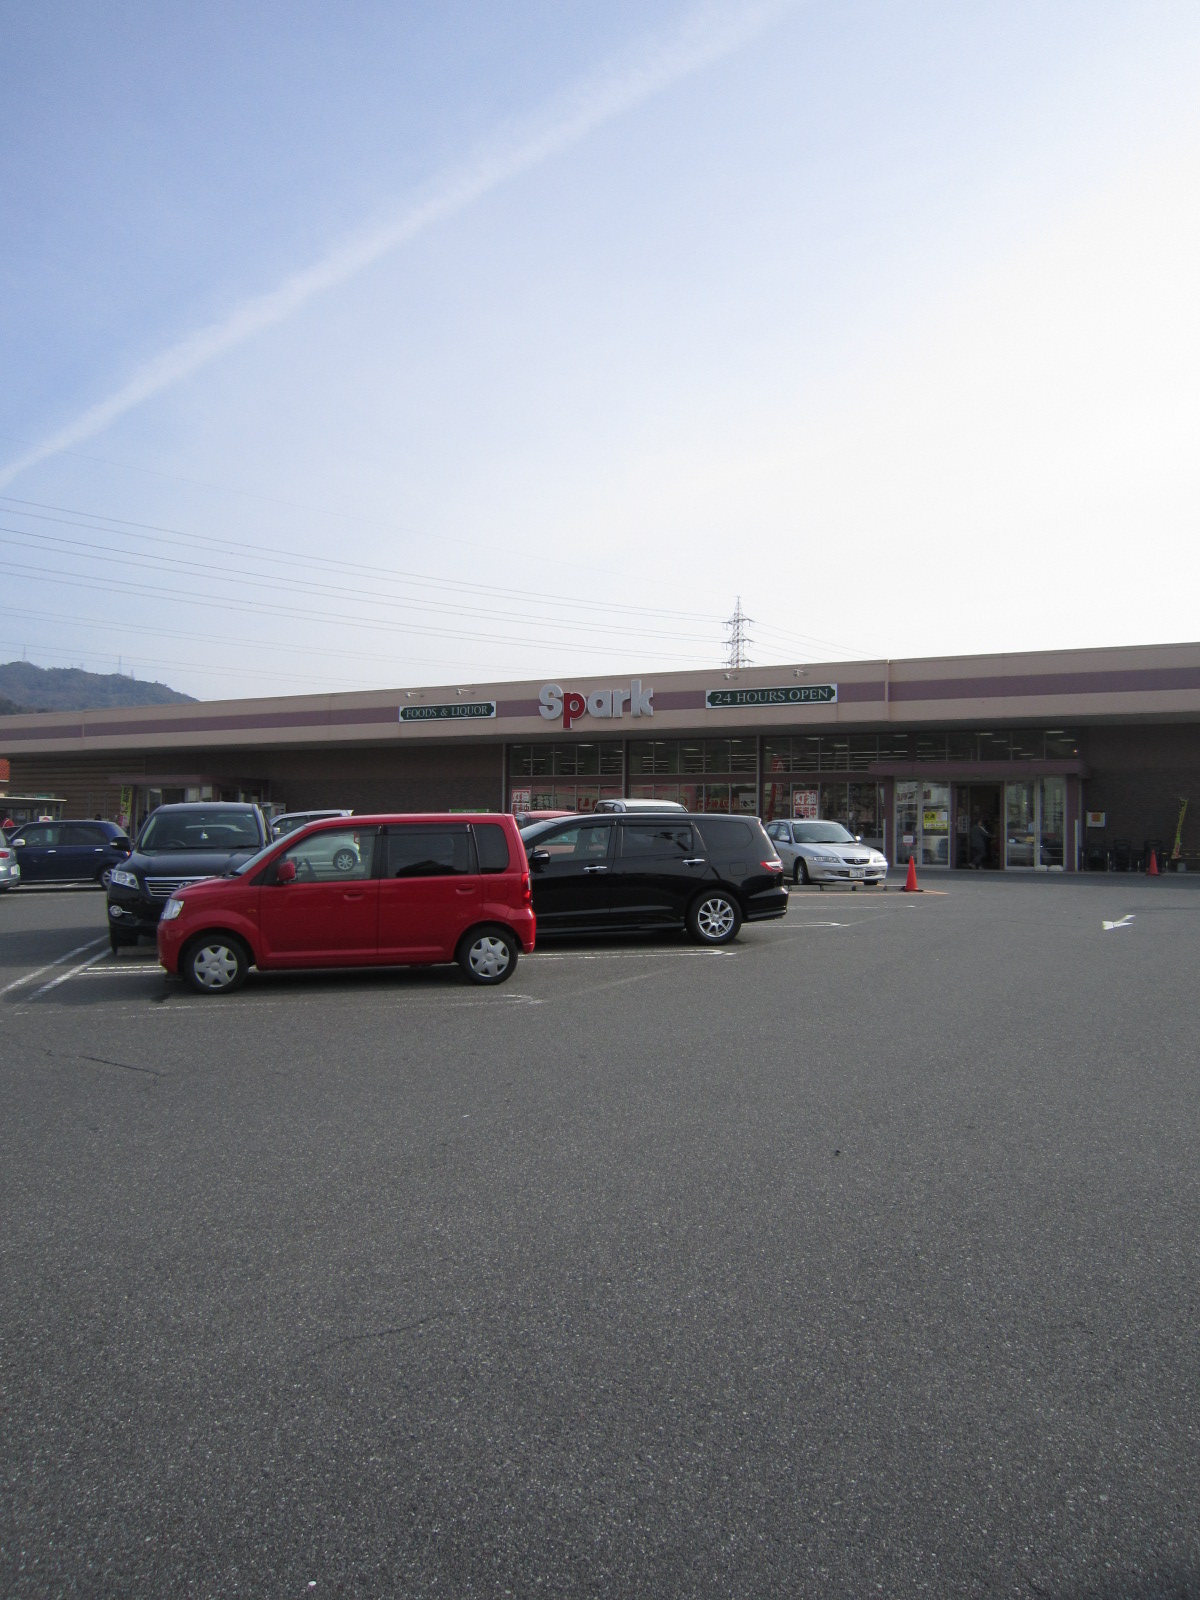 Supermarket. 863m to spark Zhongshan store (Super)